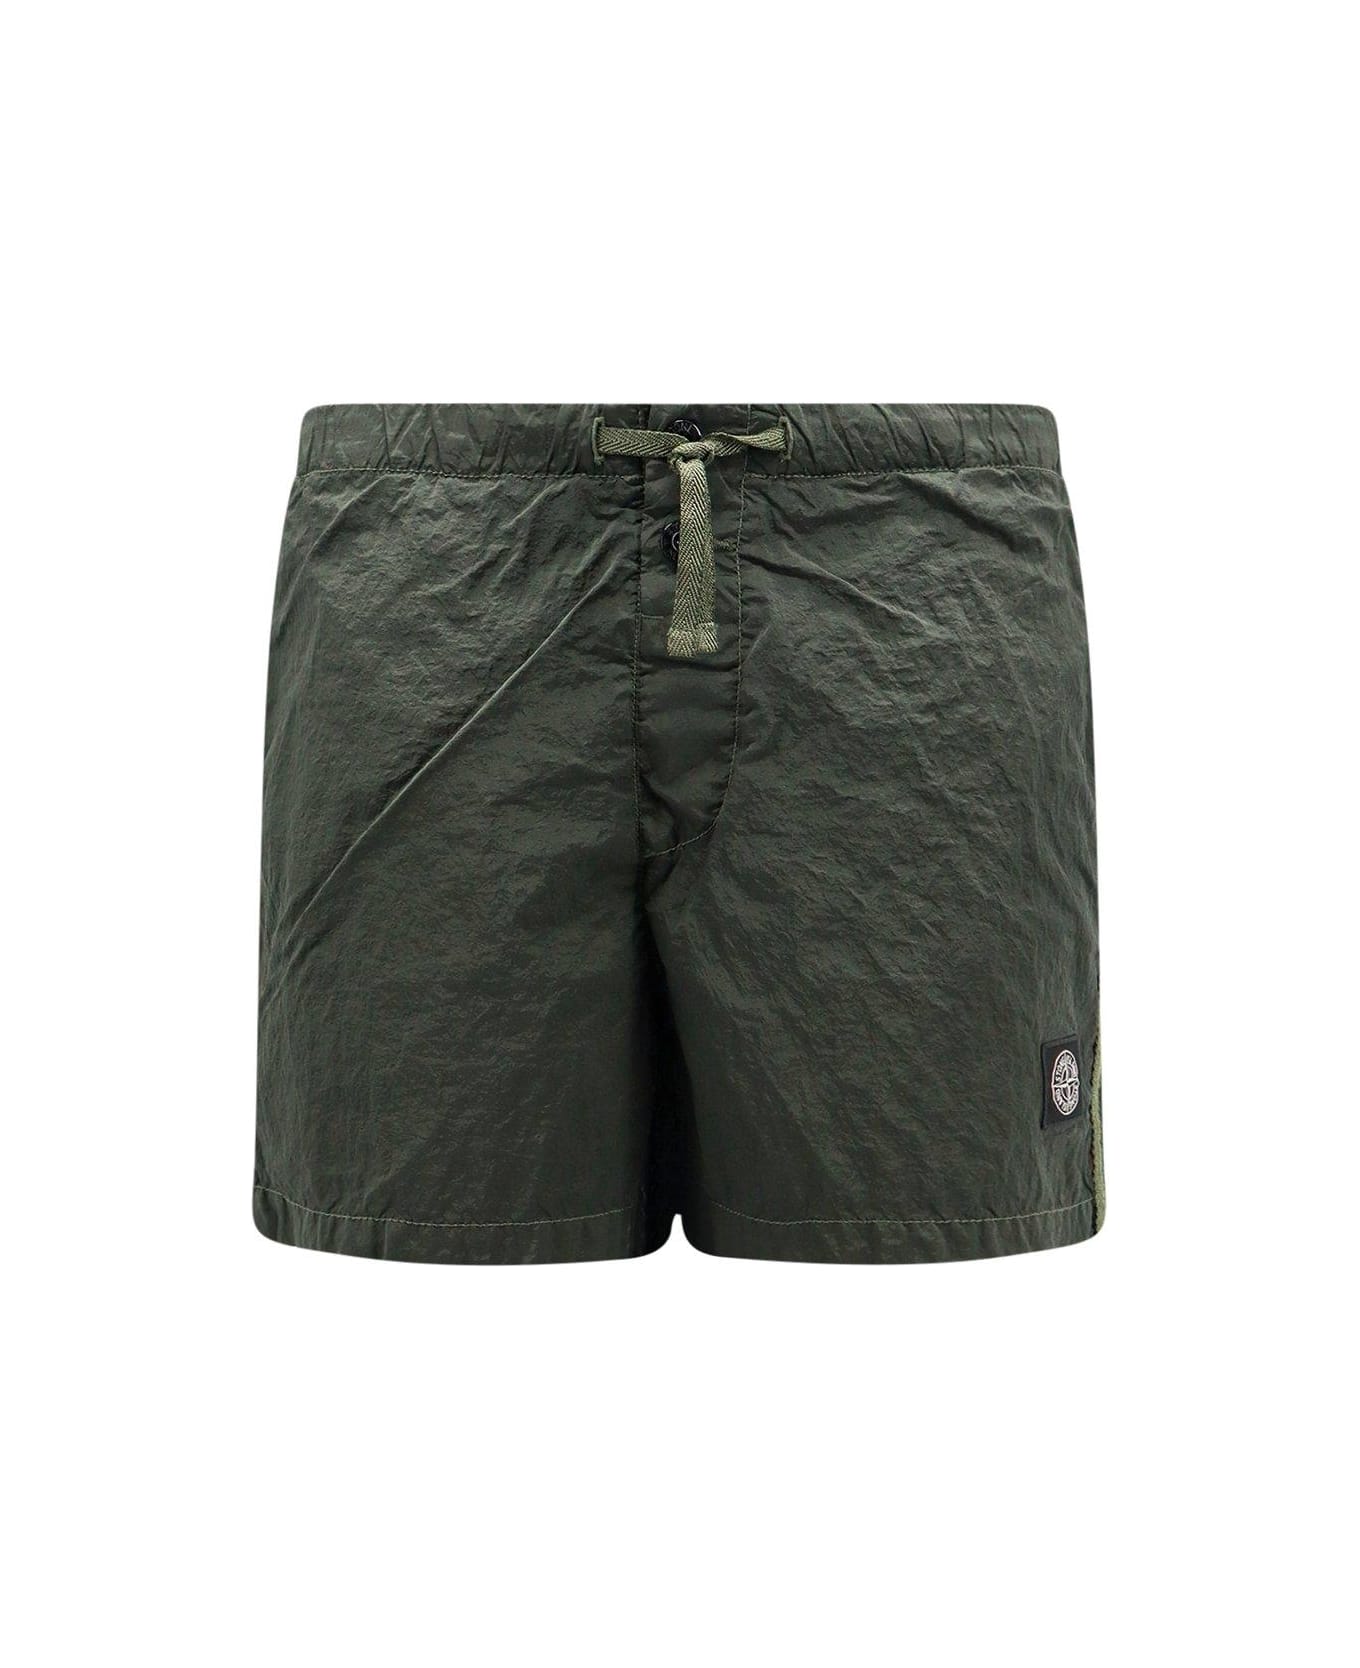 Stone Island Compass Patch Swim Shorts - Green ショートパンツ